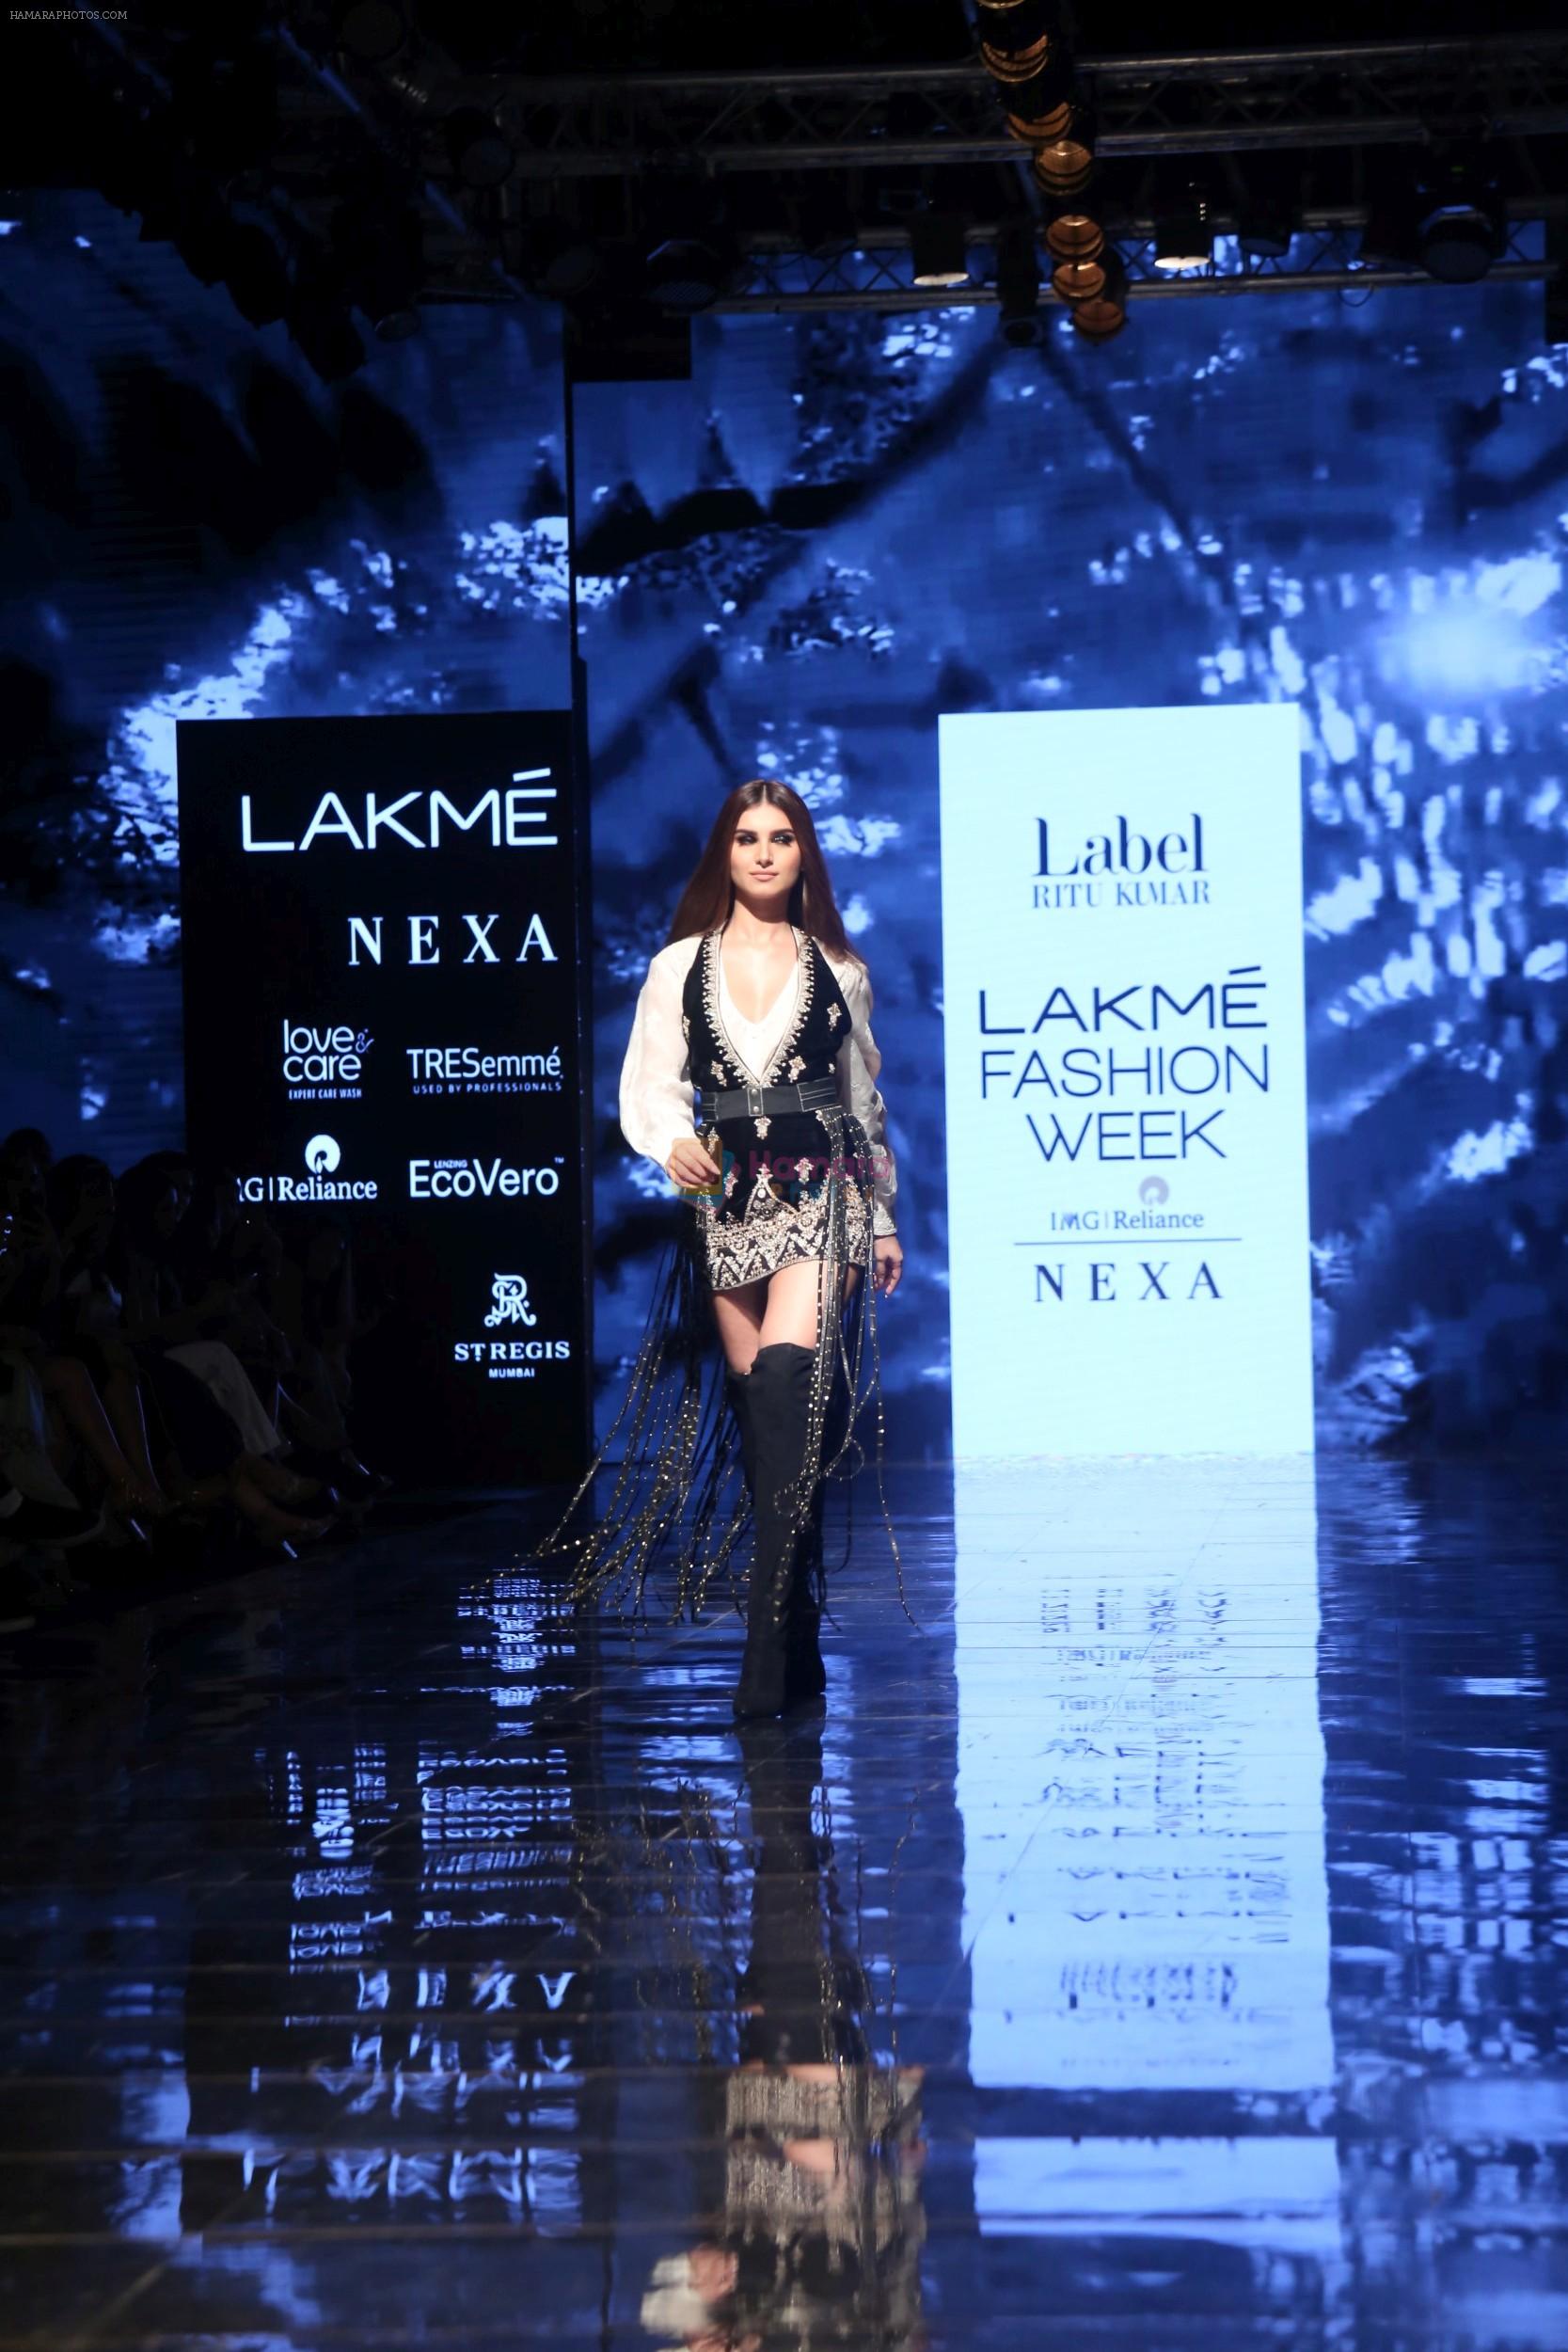 Tara sutaria walk the ramp for Ritu Kumar at Lakme Fashion Week Day 3 on 23rd Aug 2019